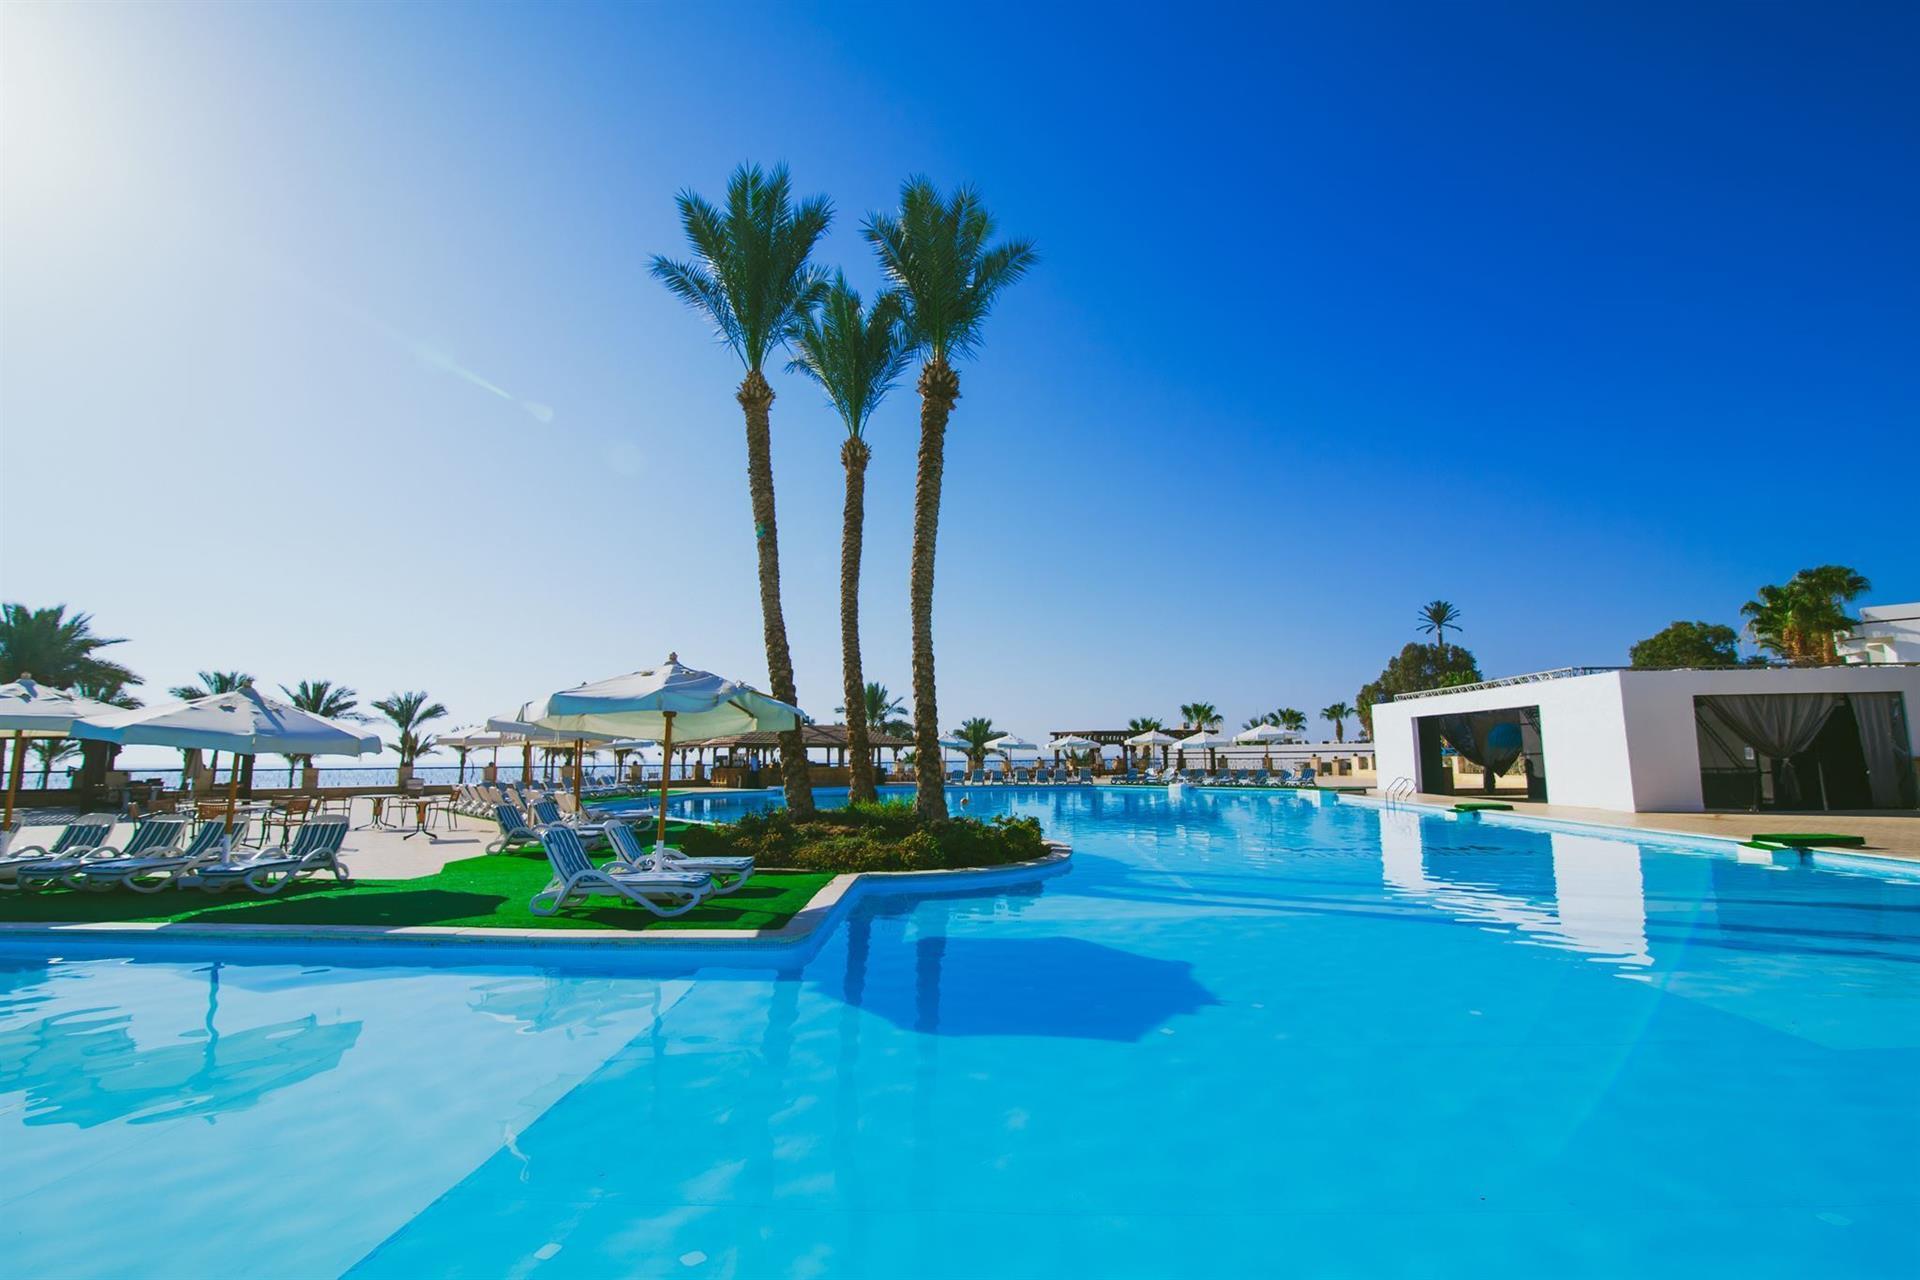 Отель Queen Sharm Resort, 4* (ex.Vera Club Queen Beach Sharm) .